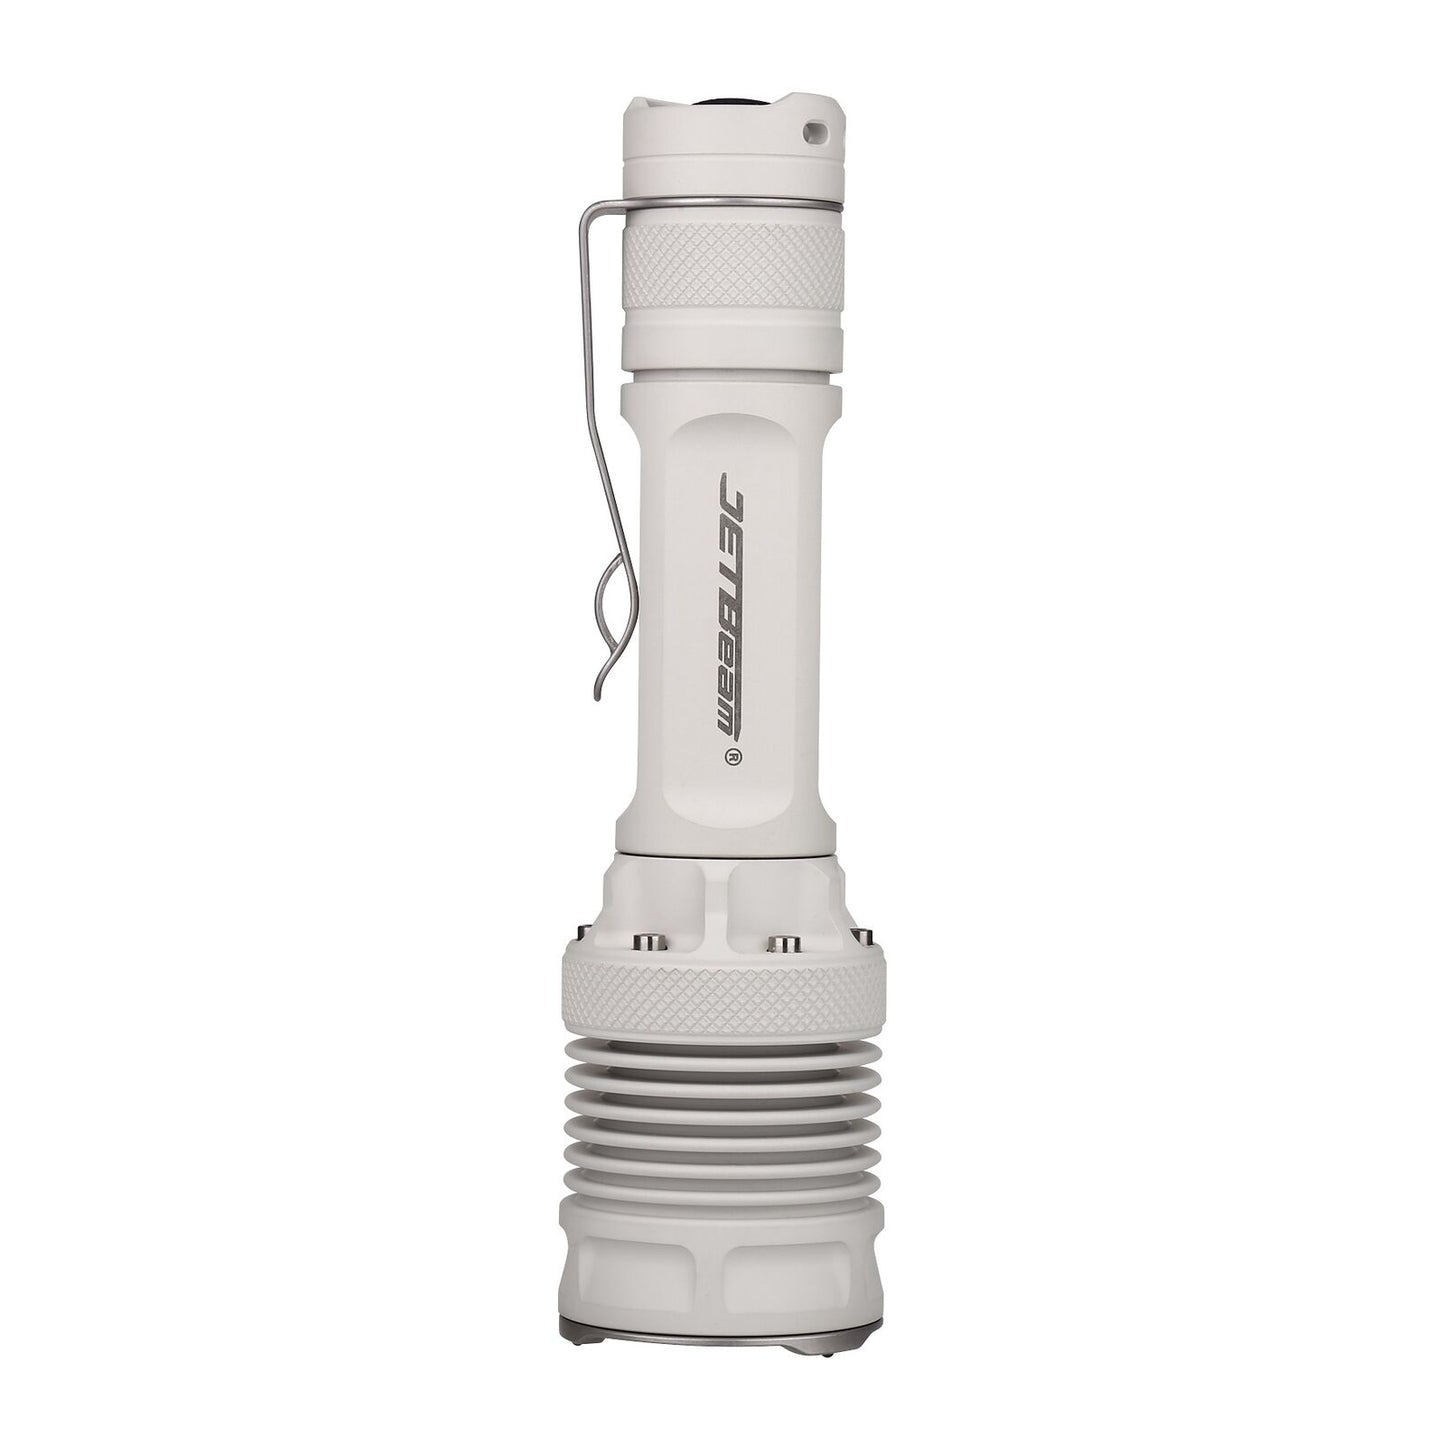 New Jetbeam M37 White 3000 Lumens LED Flashlight Torch ( NO Battery )